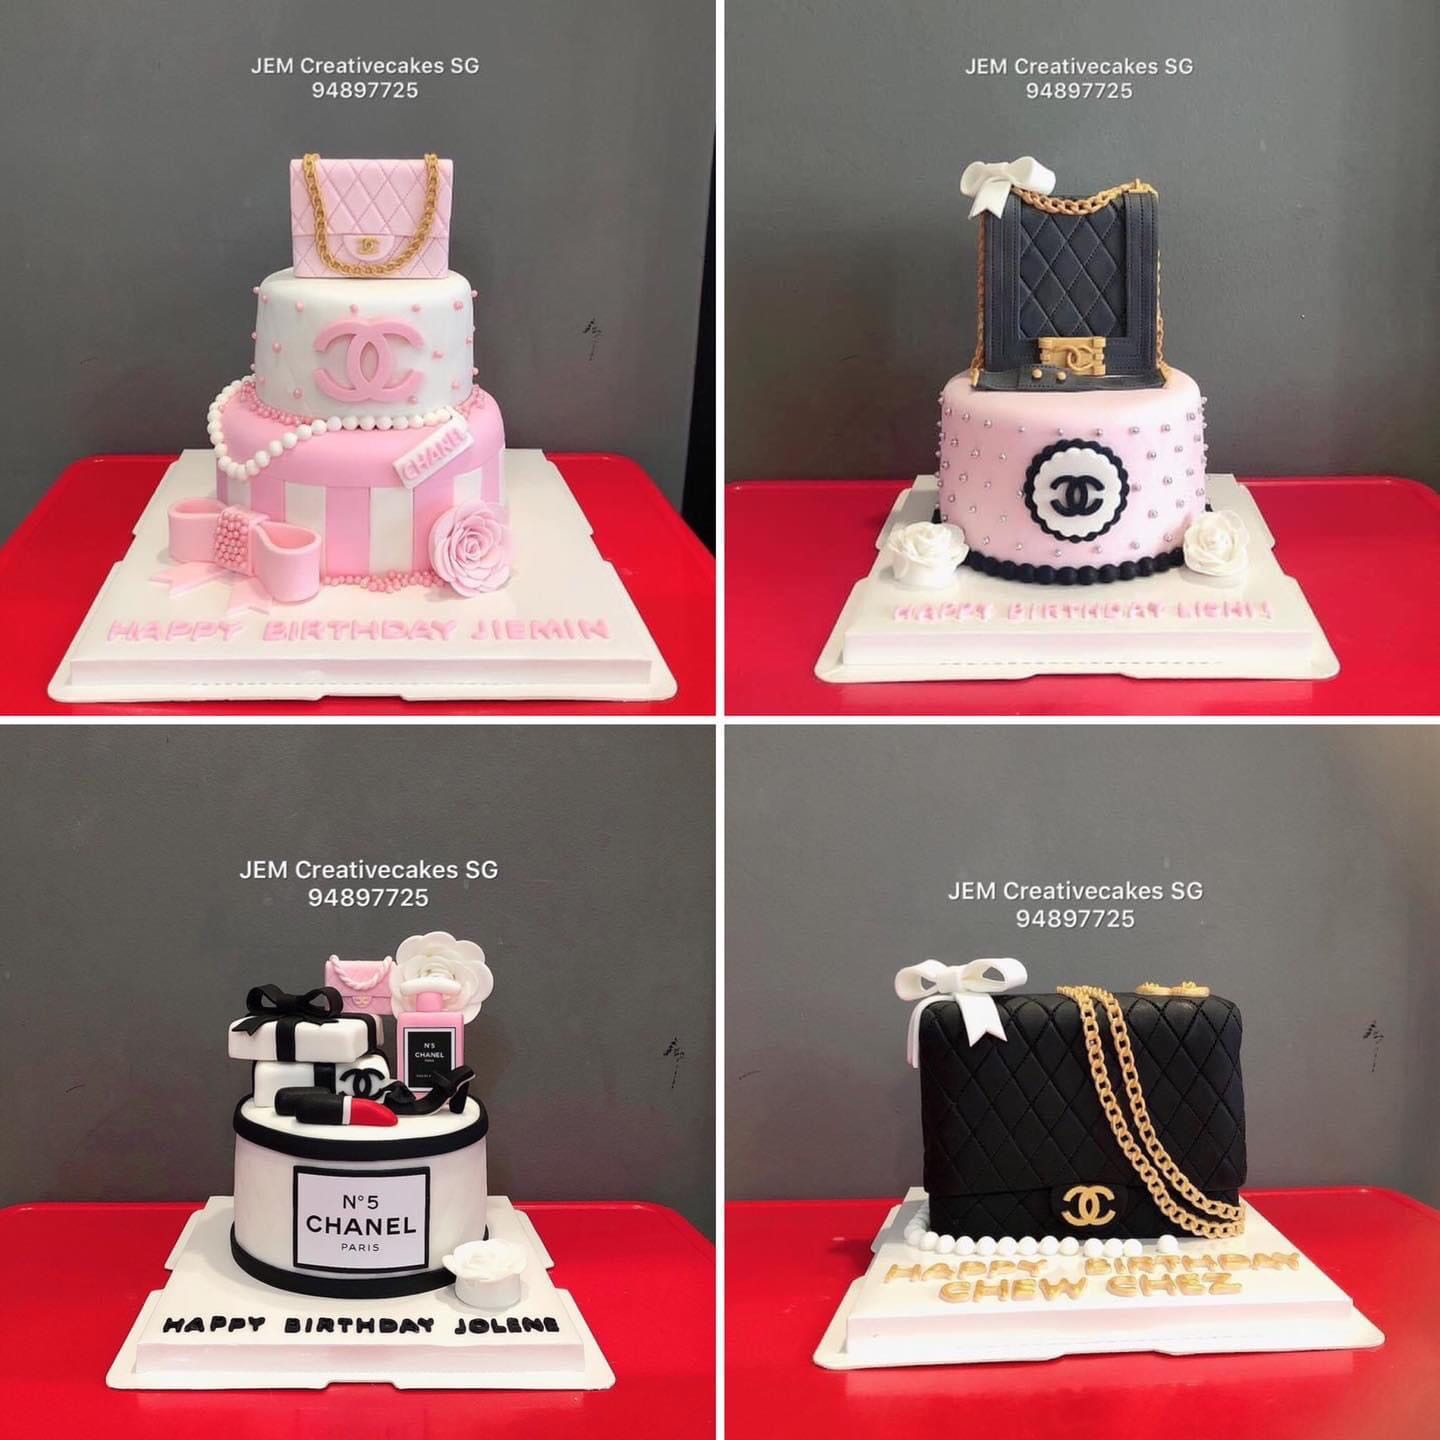 Channel theme birthday cake - Ladybug Cake Creations | Facebook